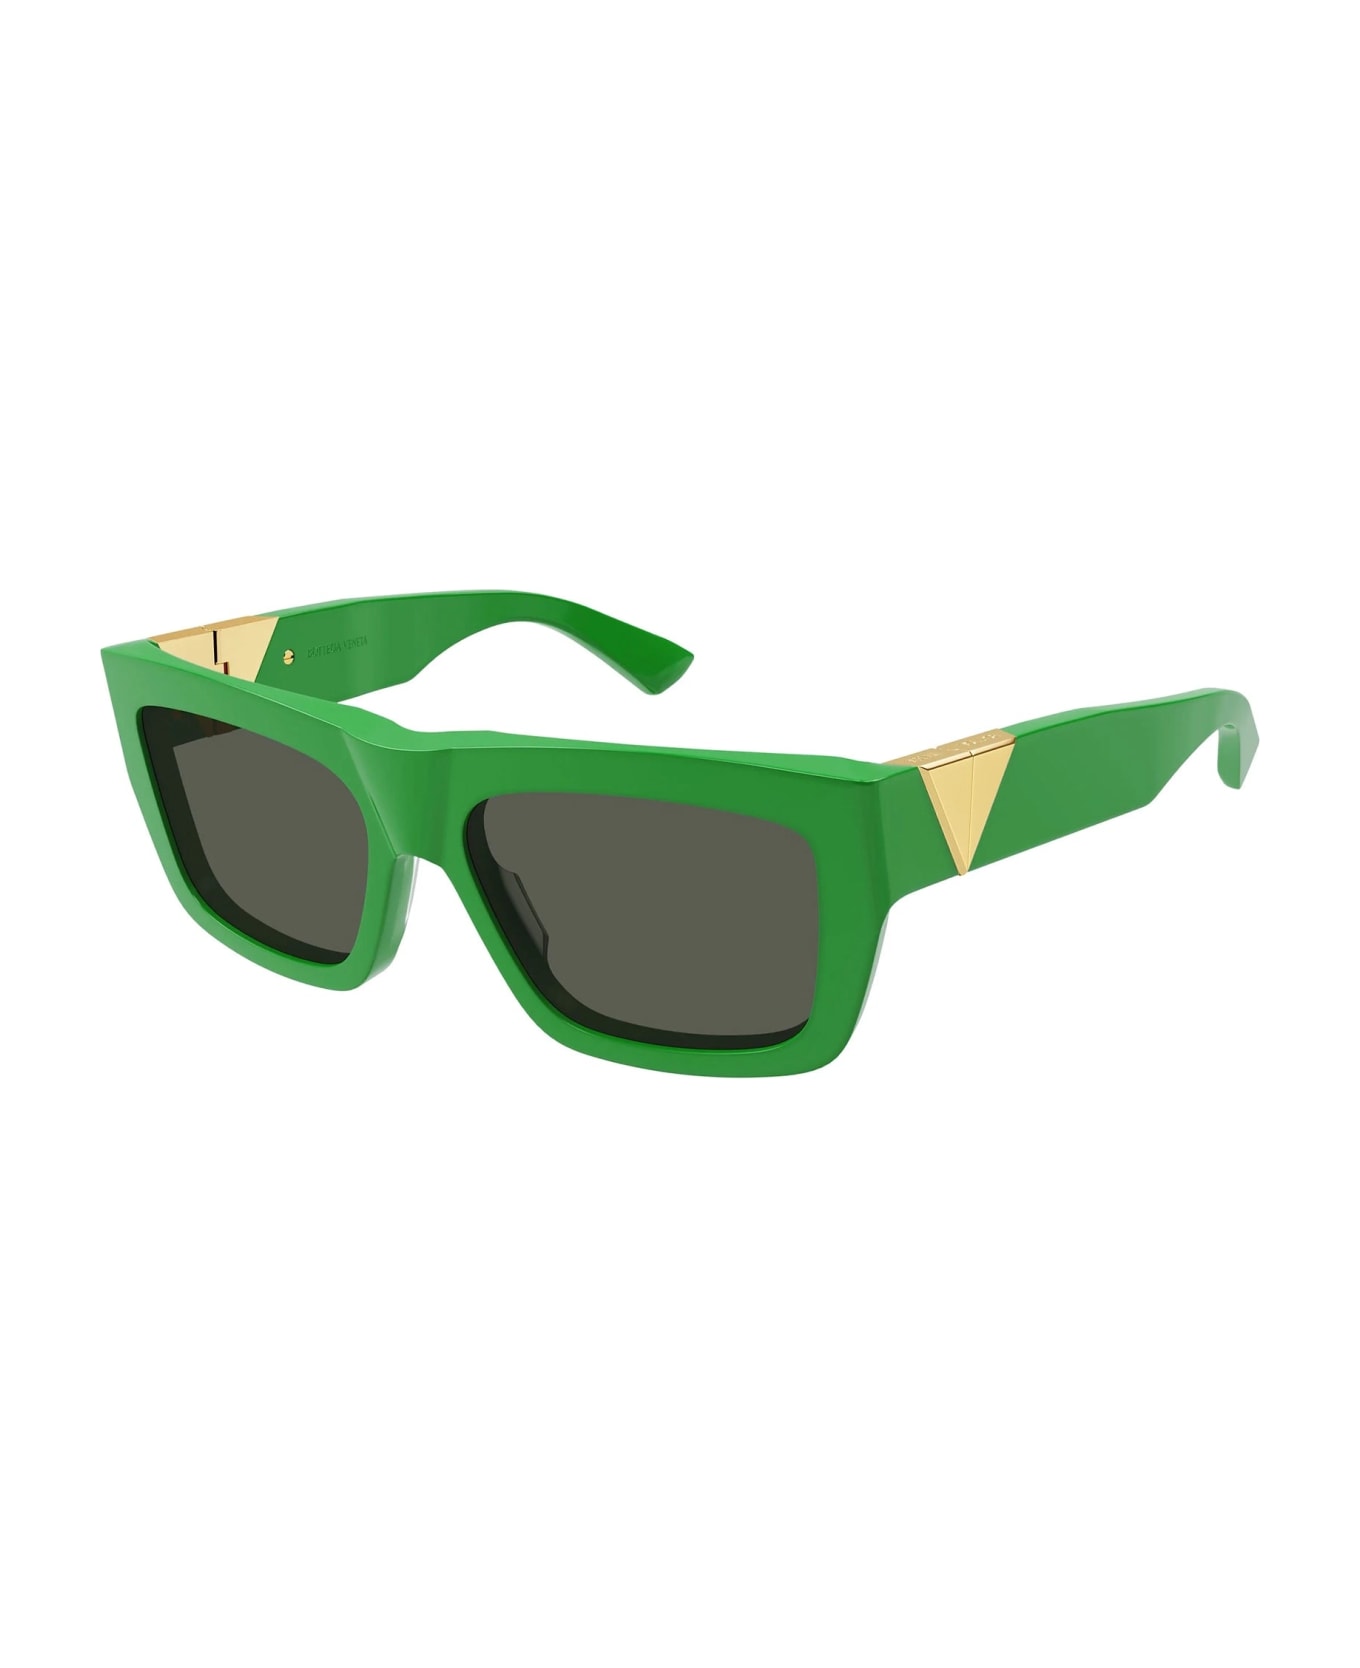 Bottega Veneta Eyewear Bv1178s-003 - Green Sunglasses - green